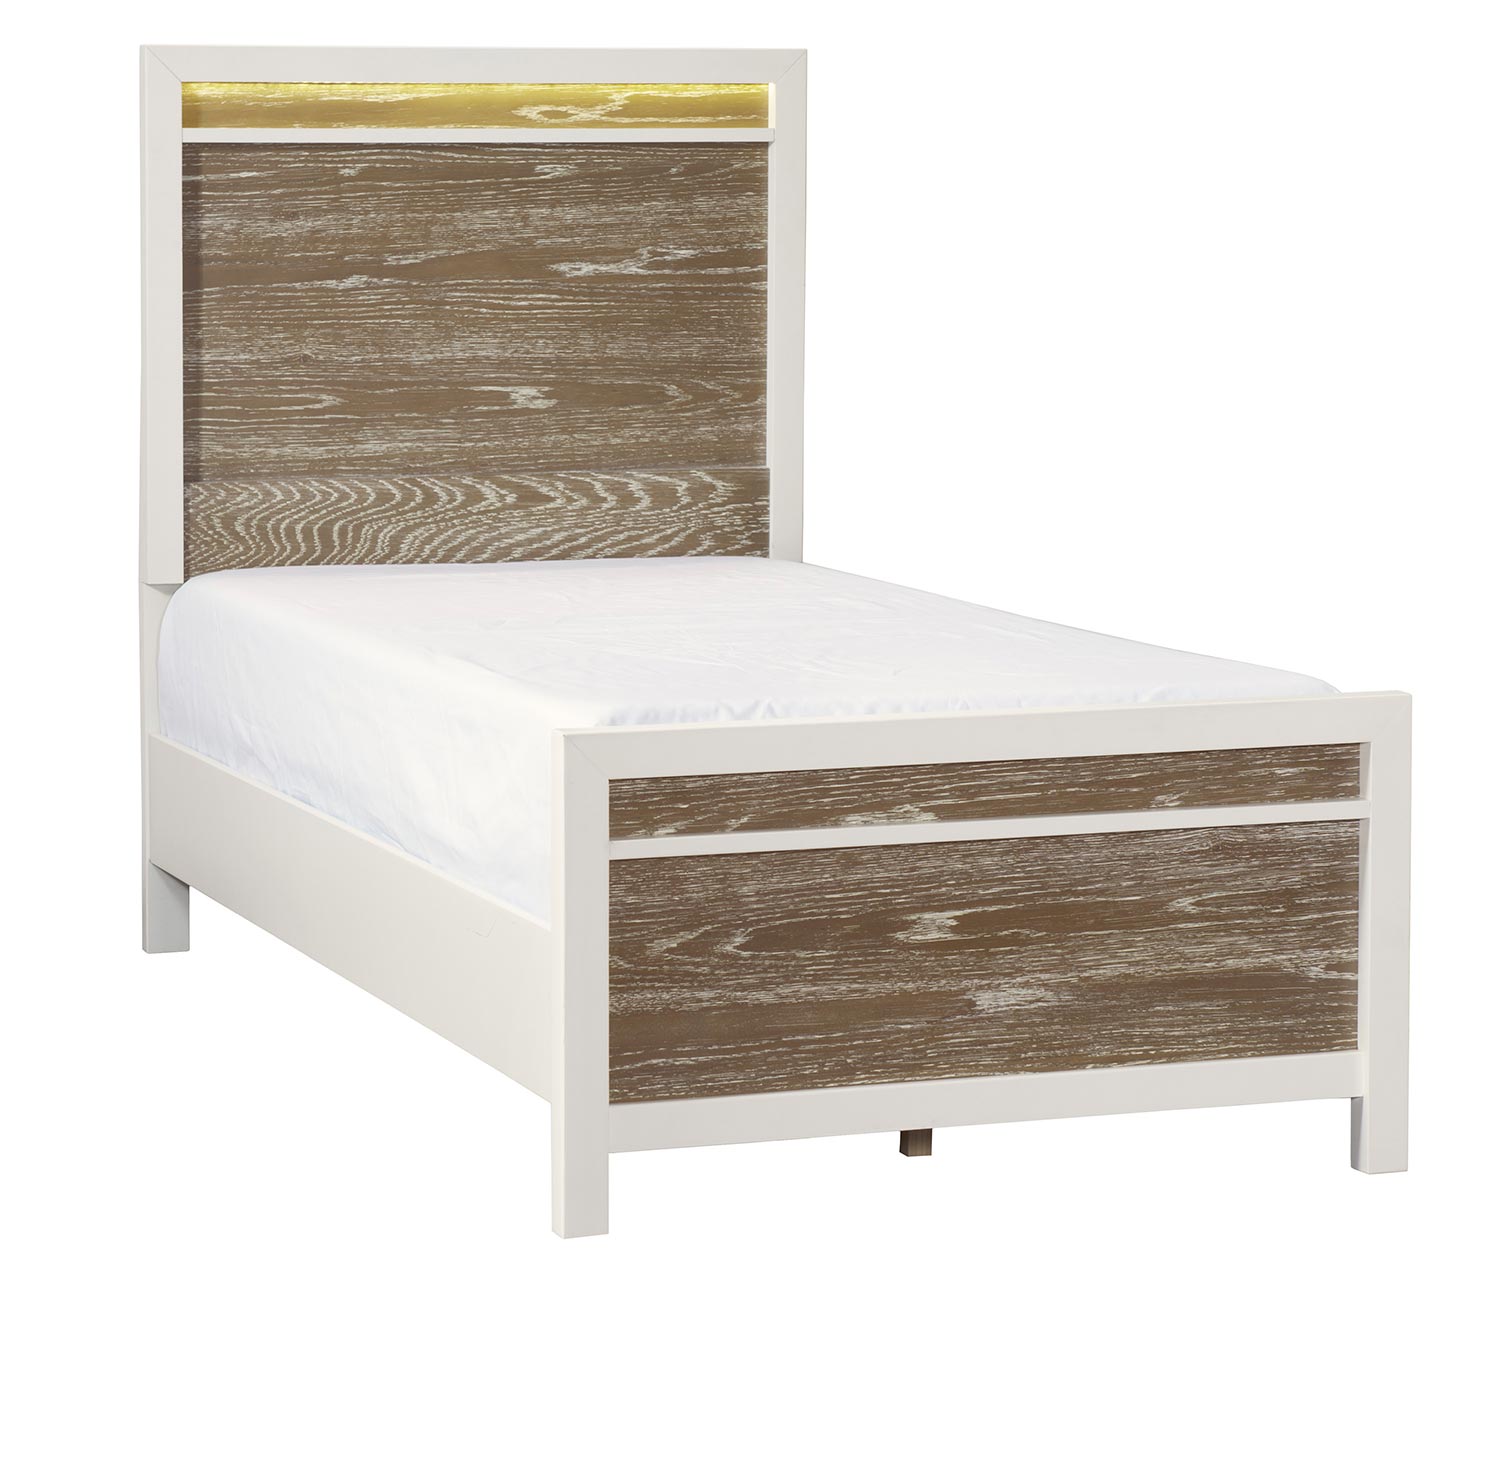 Homelegance Renly Bed with LED Lighting - Natural Finish of Oak Veneer with White Framing